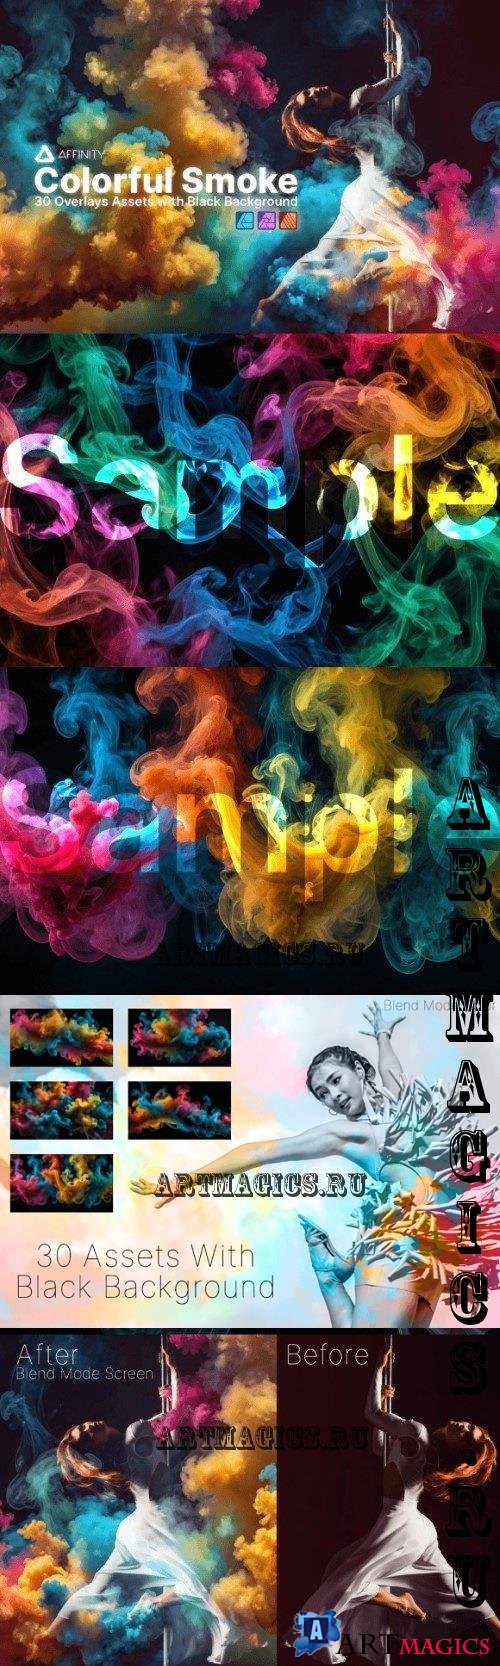 Affinity Assets Colourful Smoke Overlays